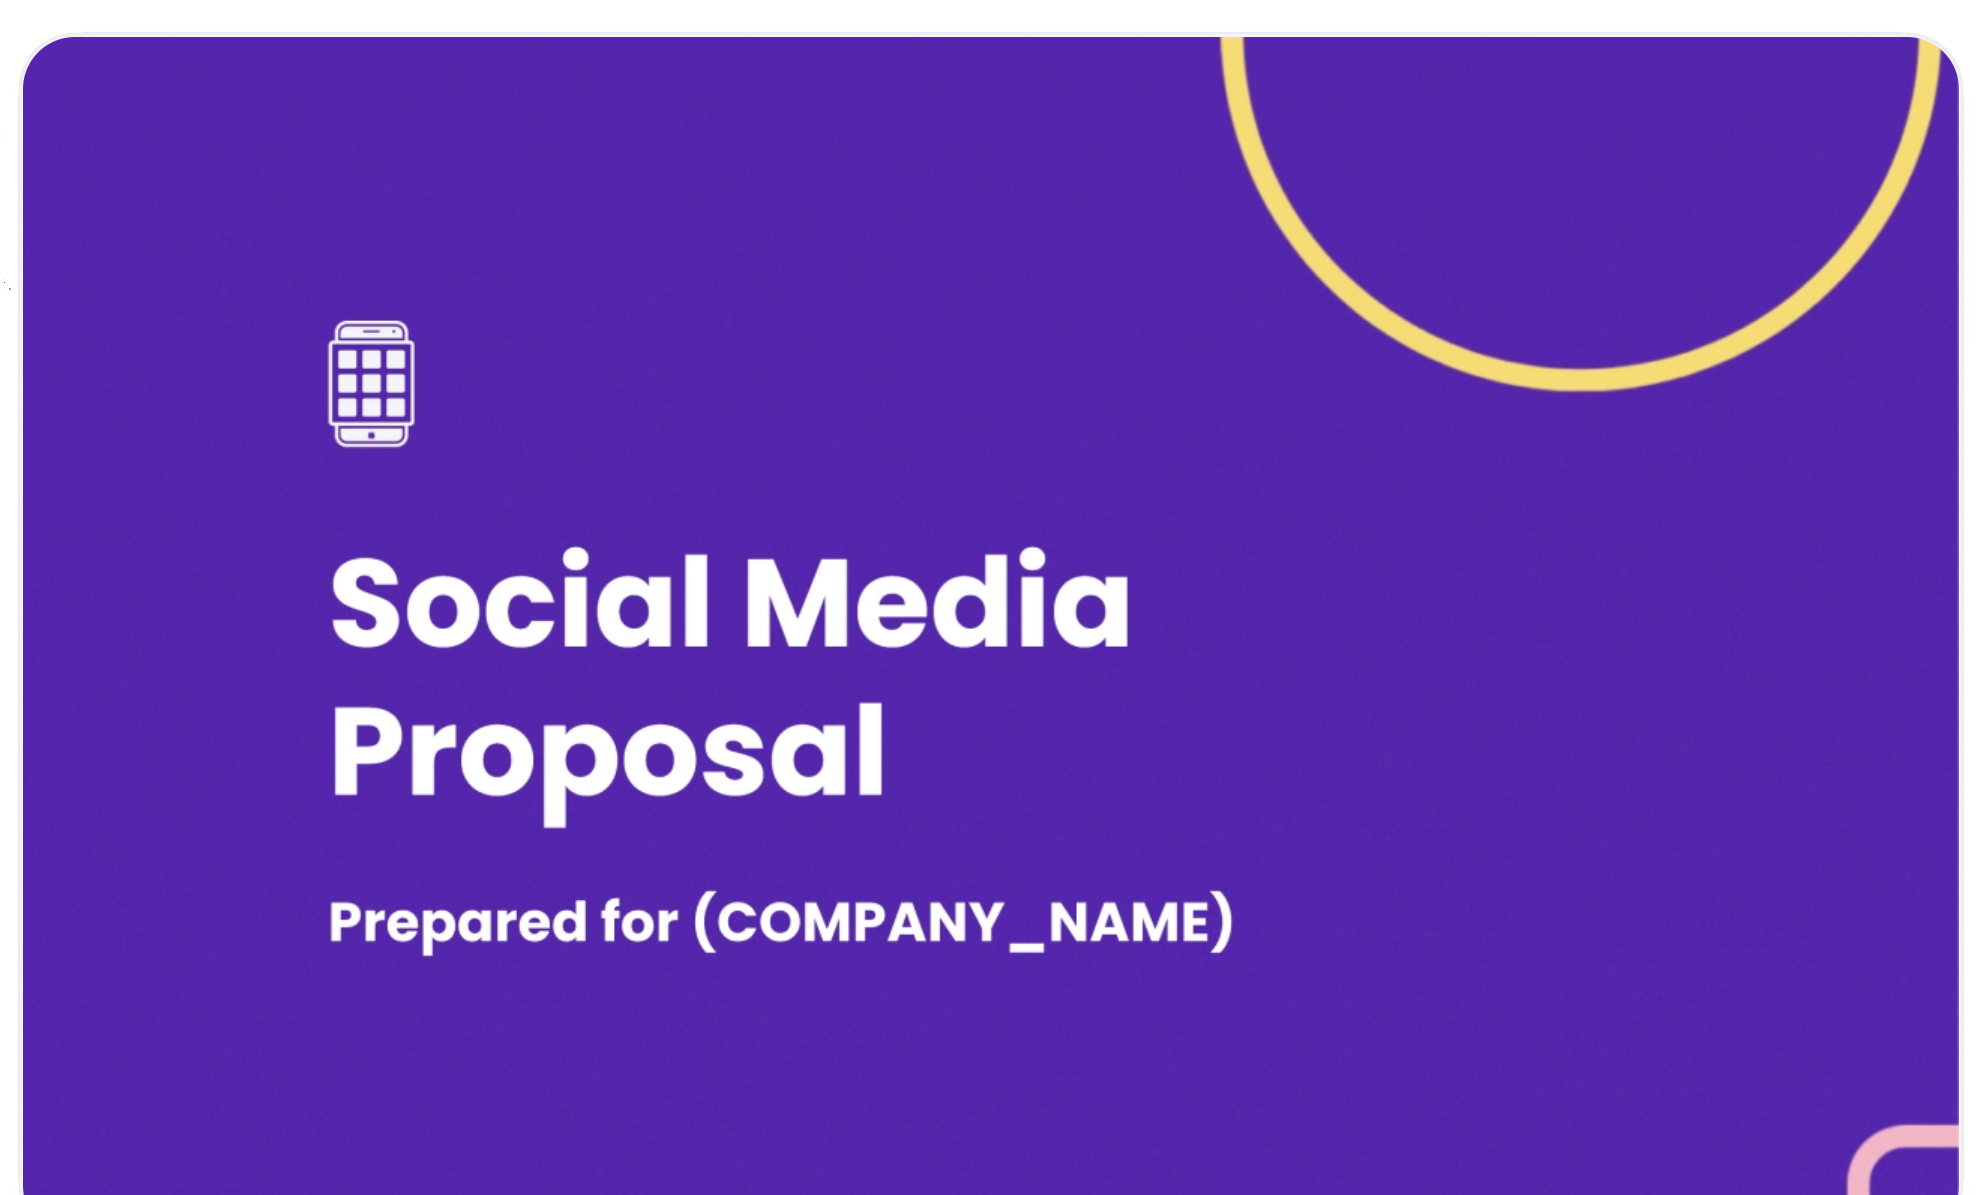 Social media proposal template